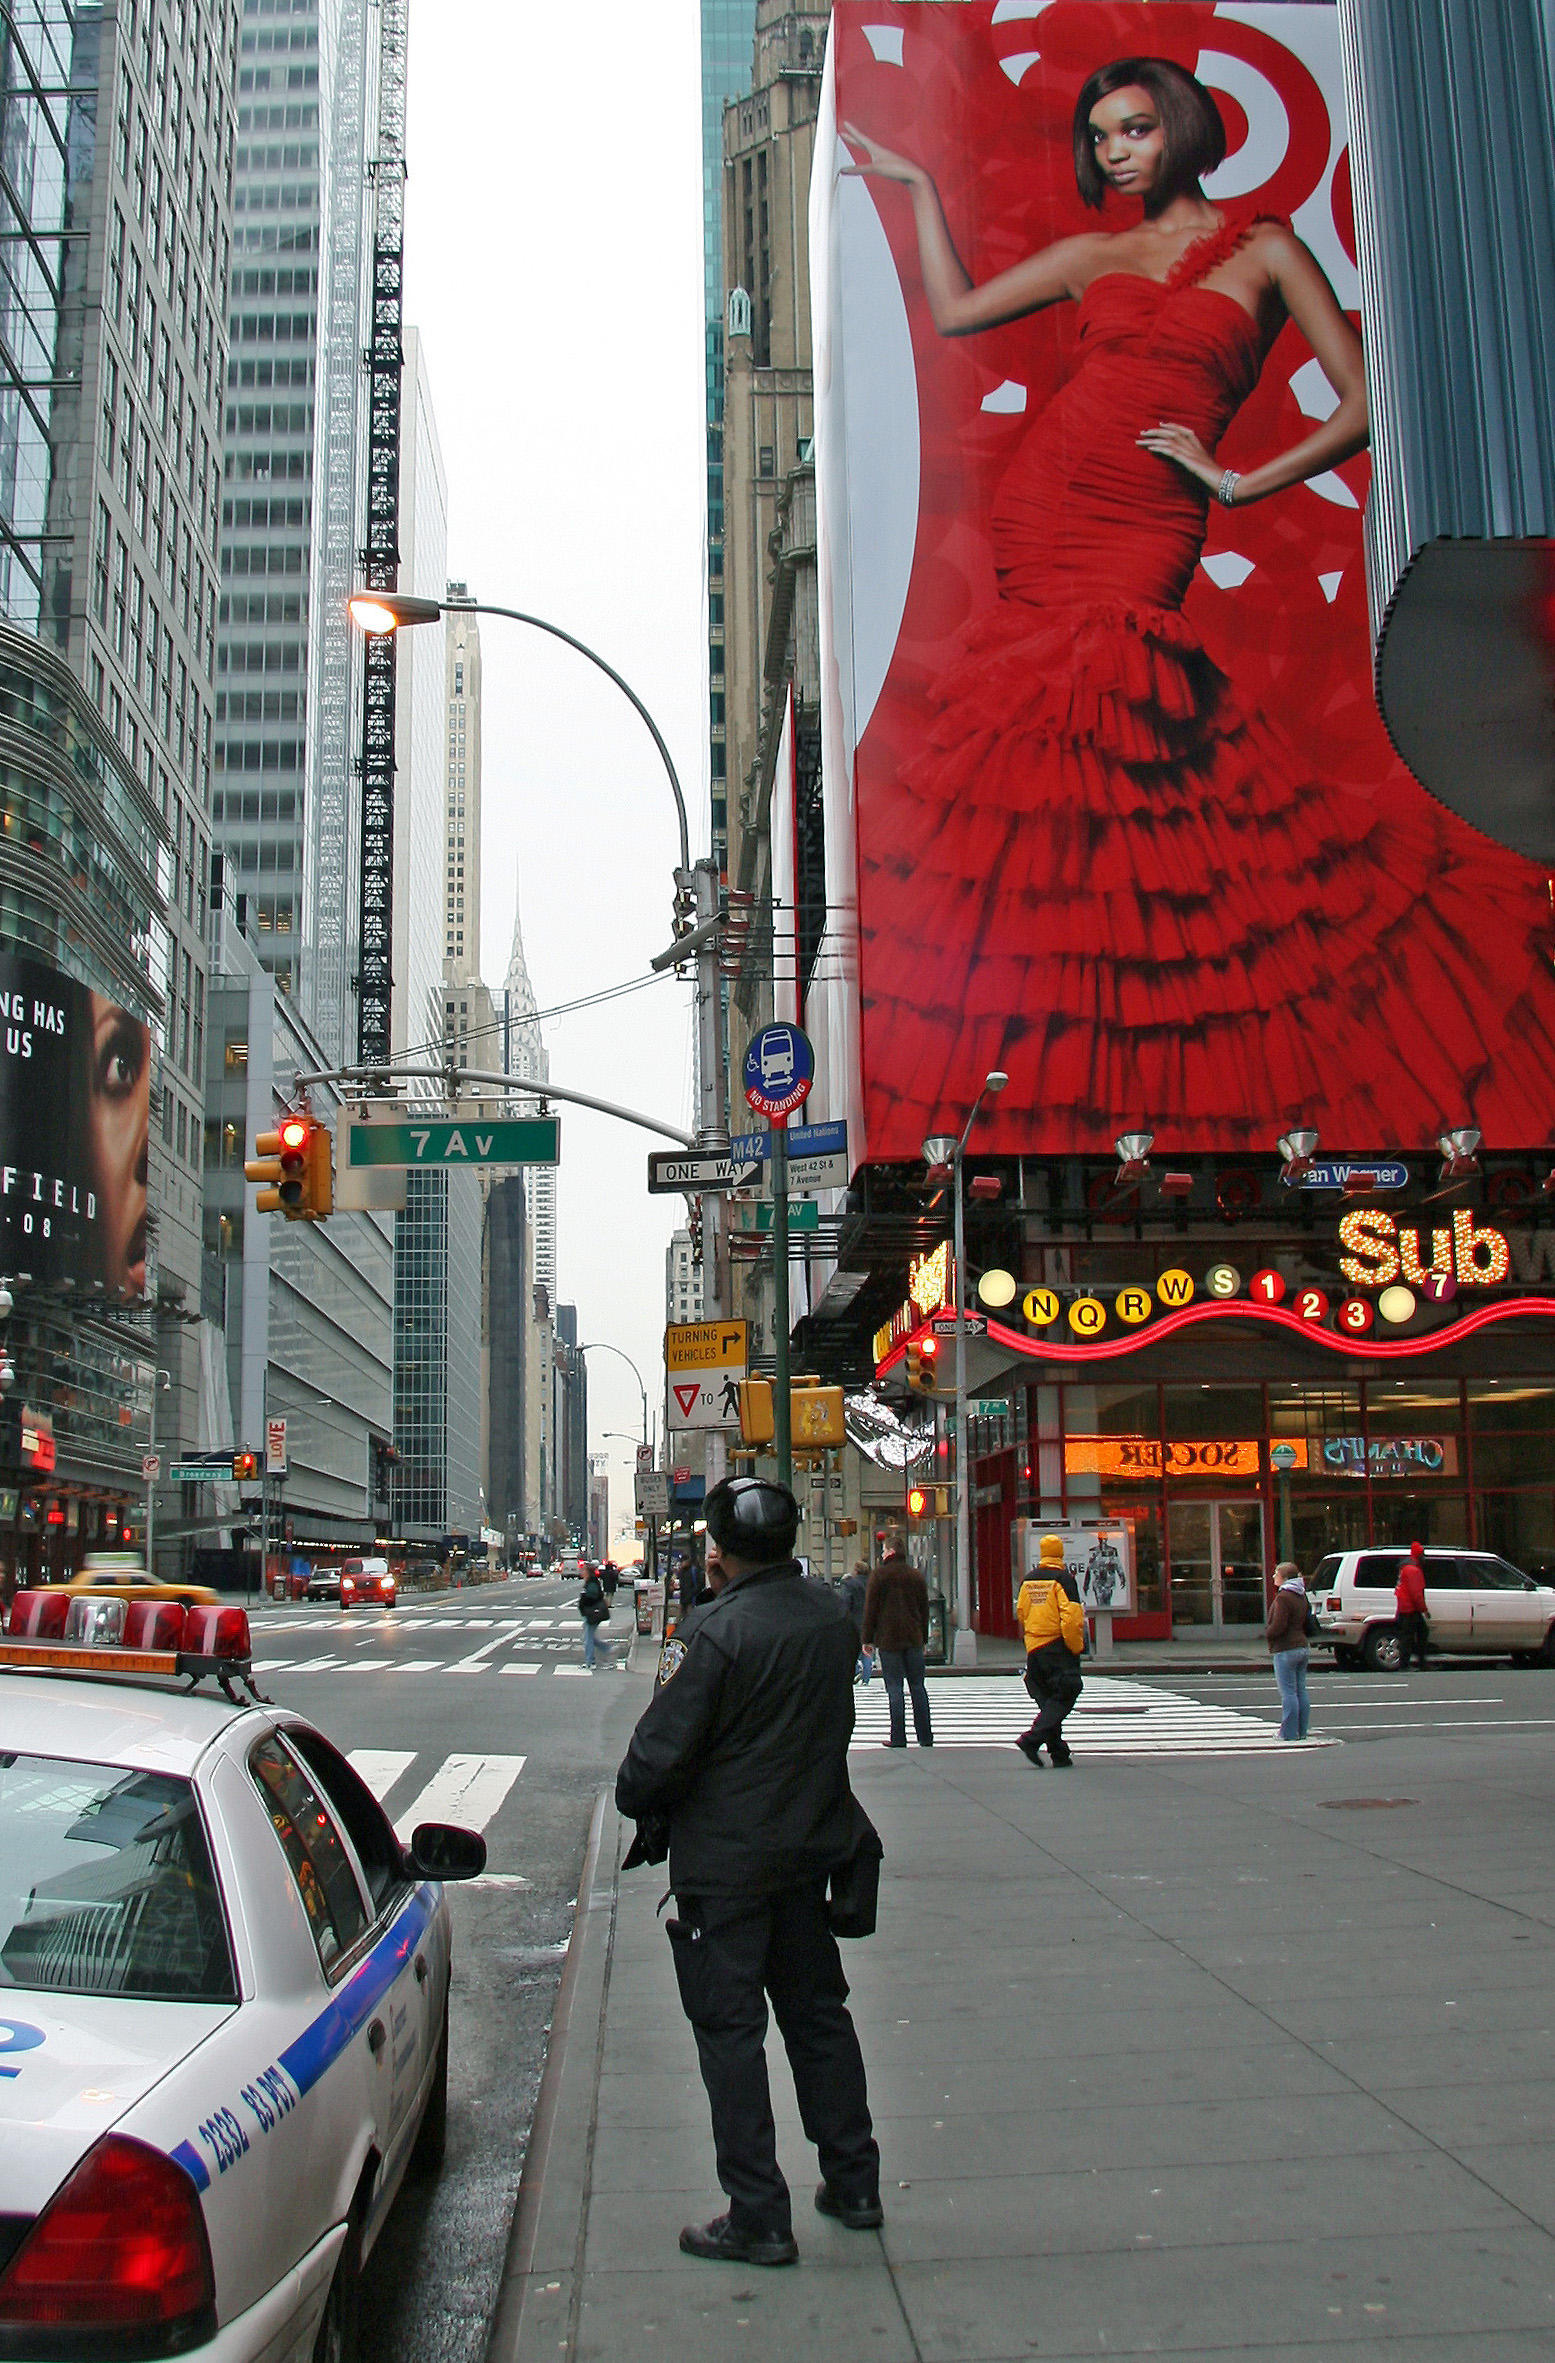 NYPD & Carmen Billboard - View of 42nd Street